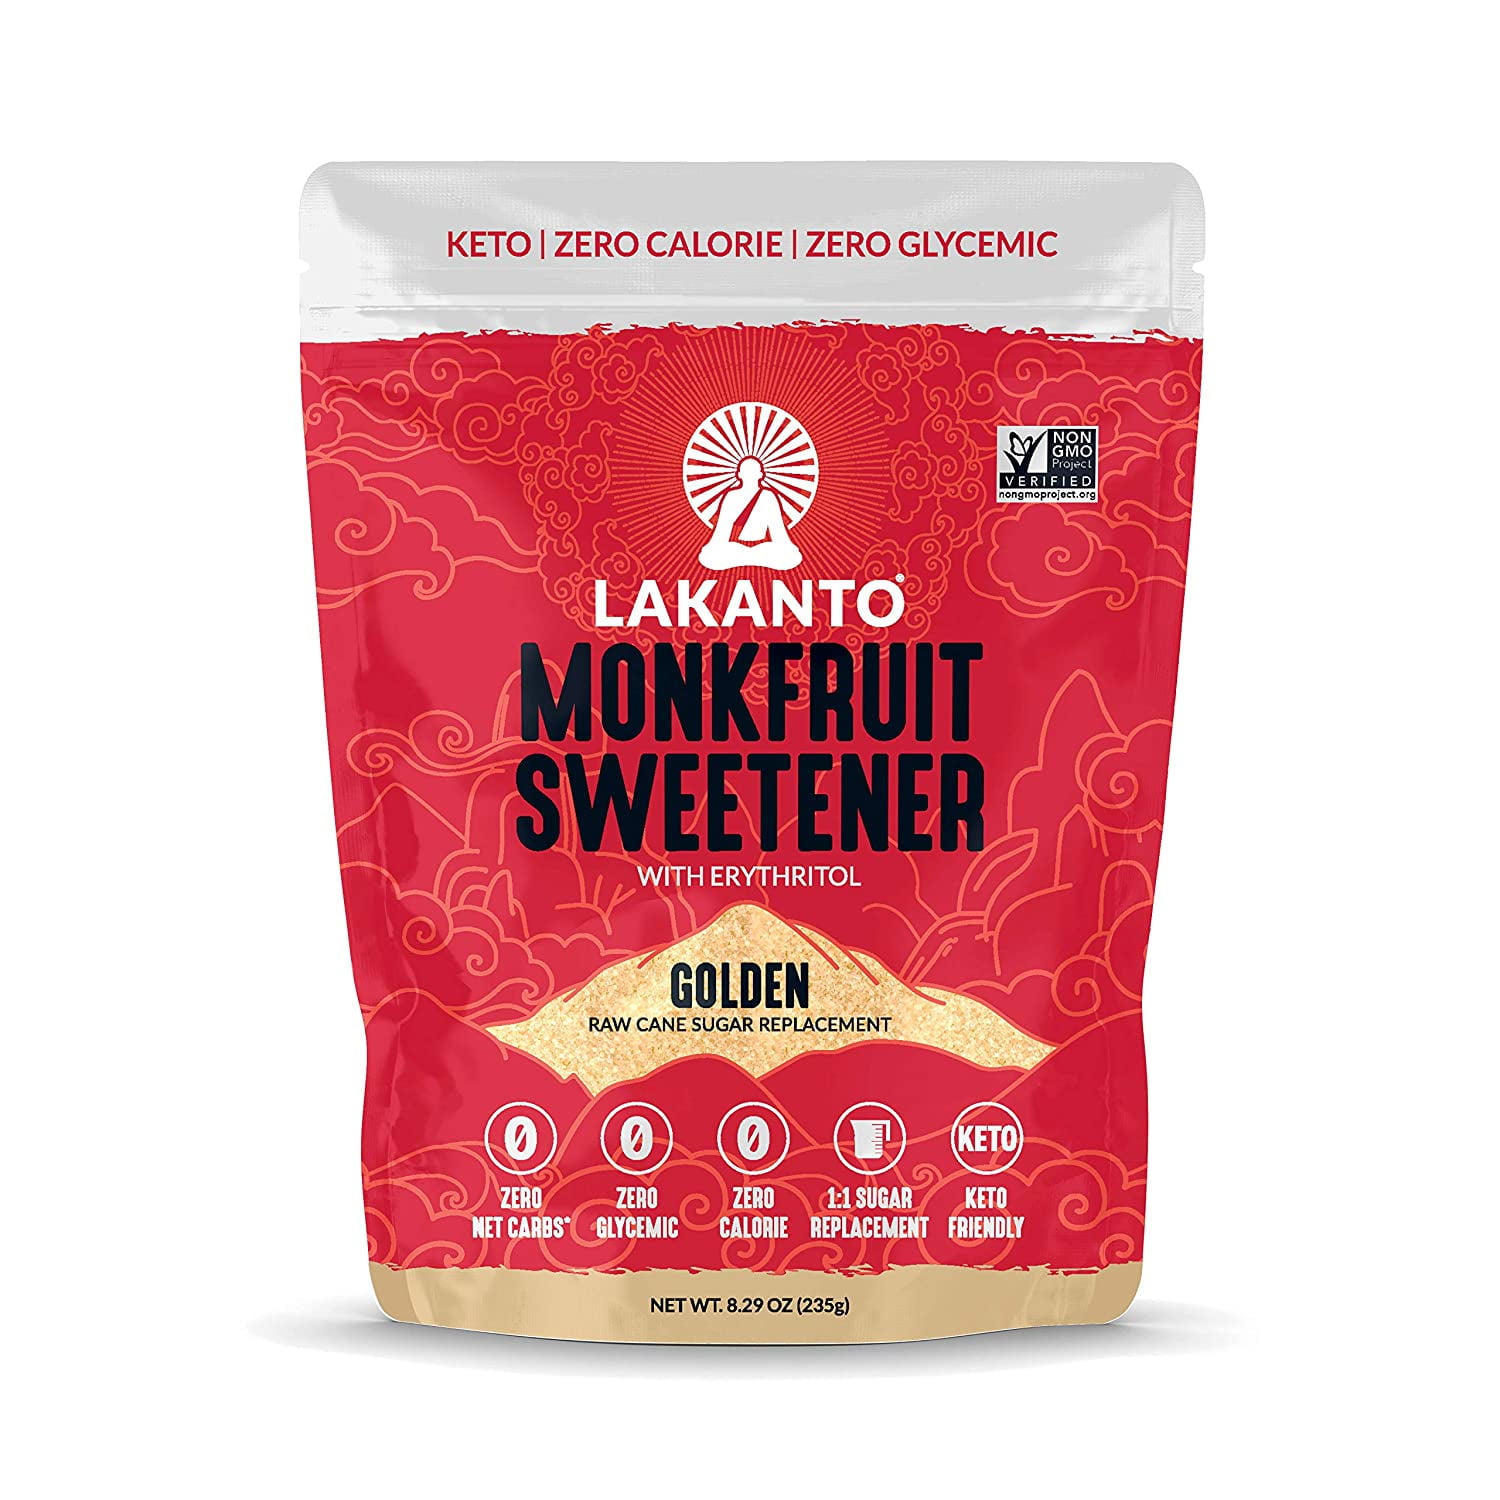 Lakanto Golden Monk Fruit Sweetener - Zero Calorie, Keto Friendly, Zero Net Carbs, Zero Glycemic